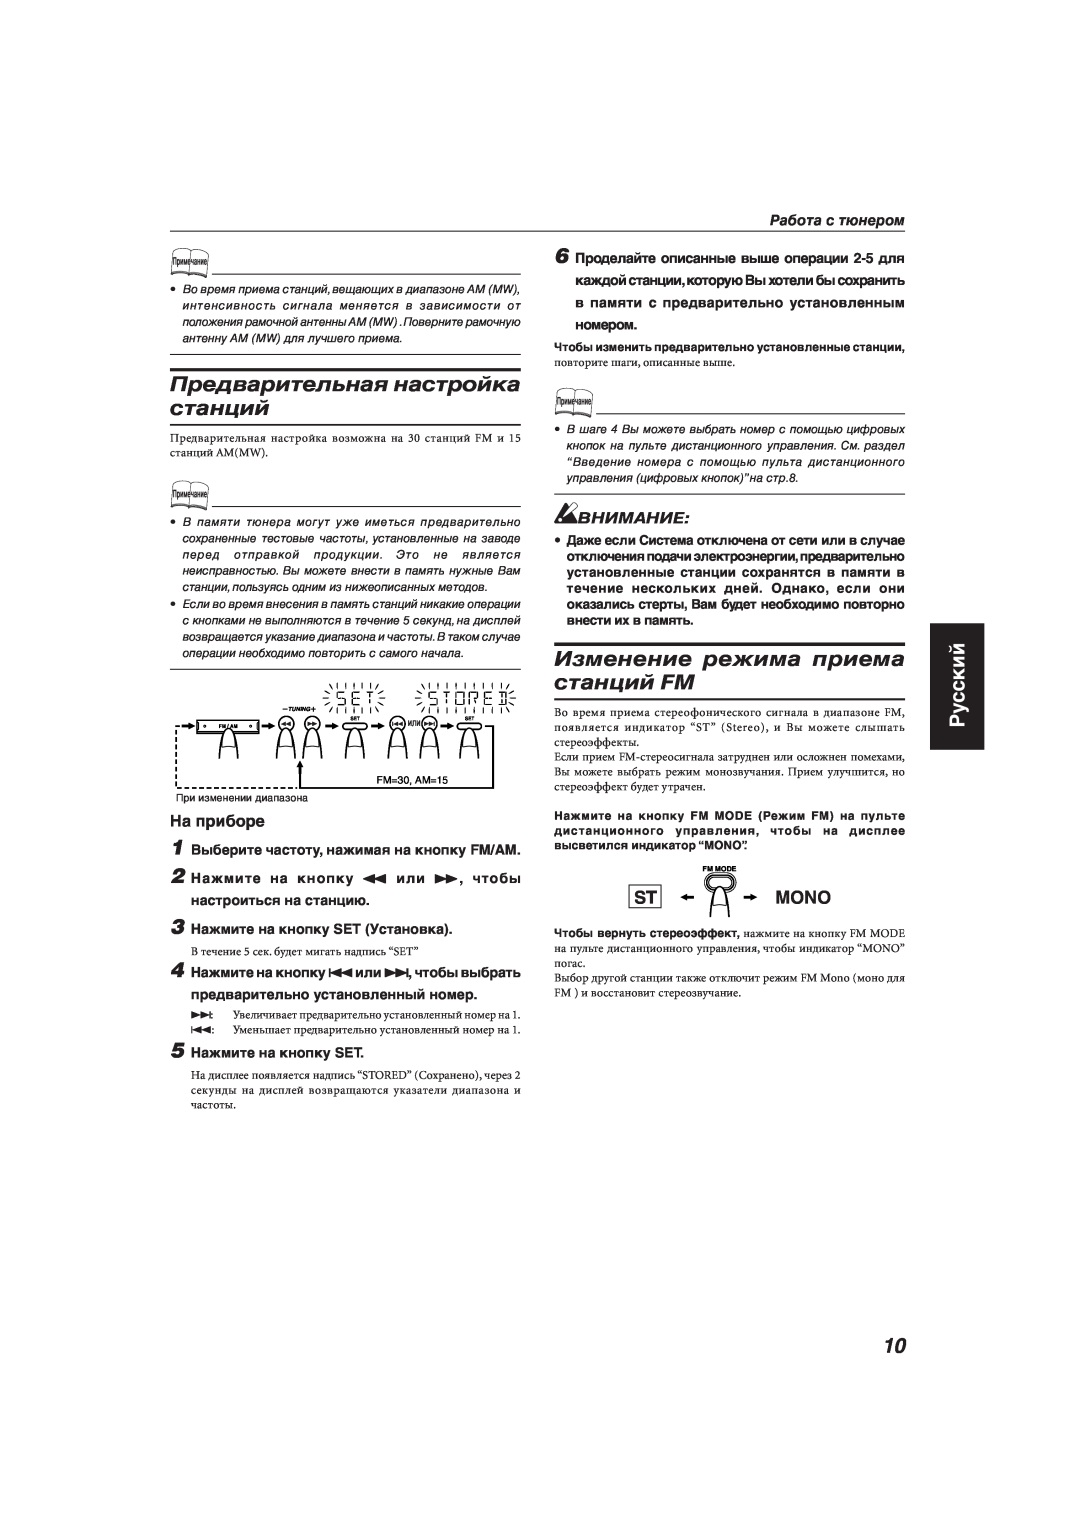 JVC MX-KA33 manual Предварительная настройка станций, Изменение режима приема станций FM, Русский, Mono, Внимание 